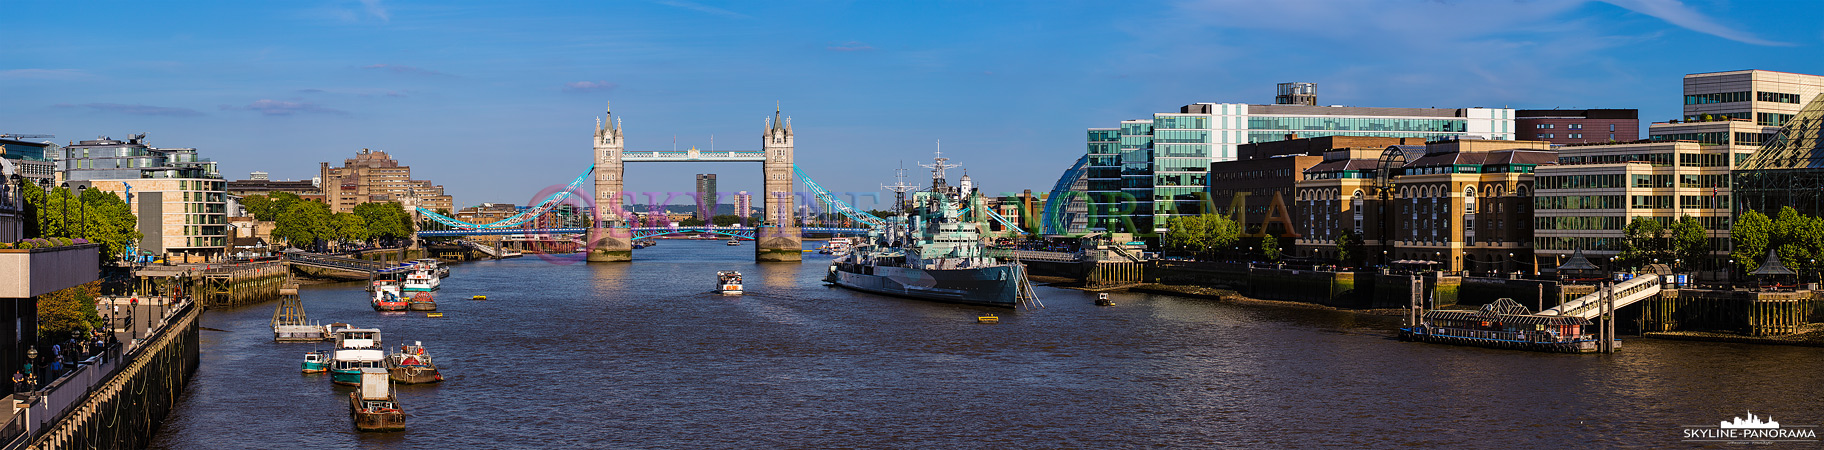 Panorama – London Bridge View (p_00824)